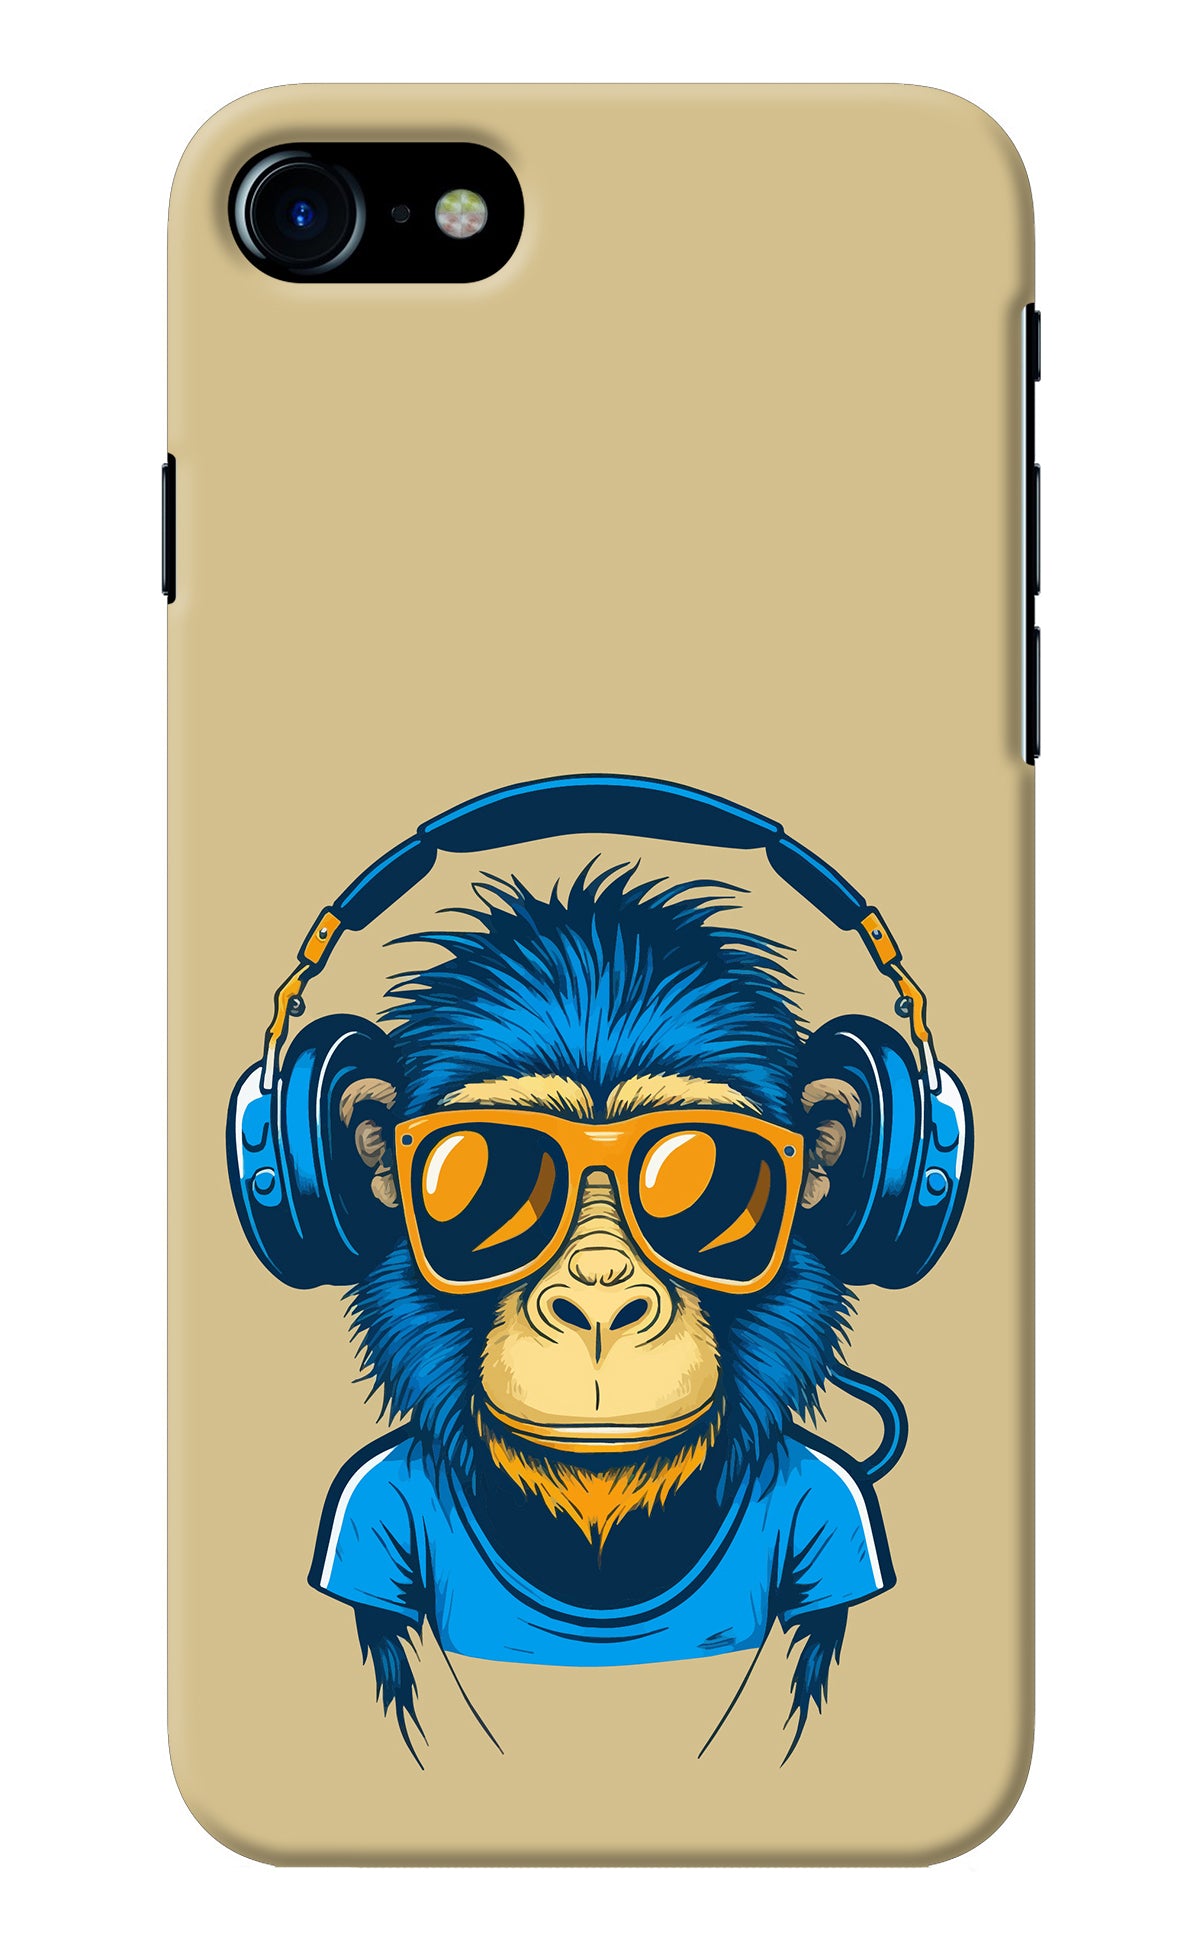 Monkey Headphone iPhone 8/SE 2020 Back Cover